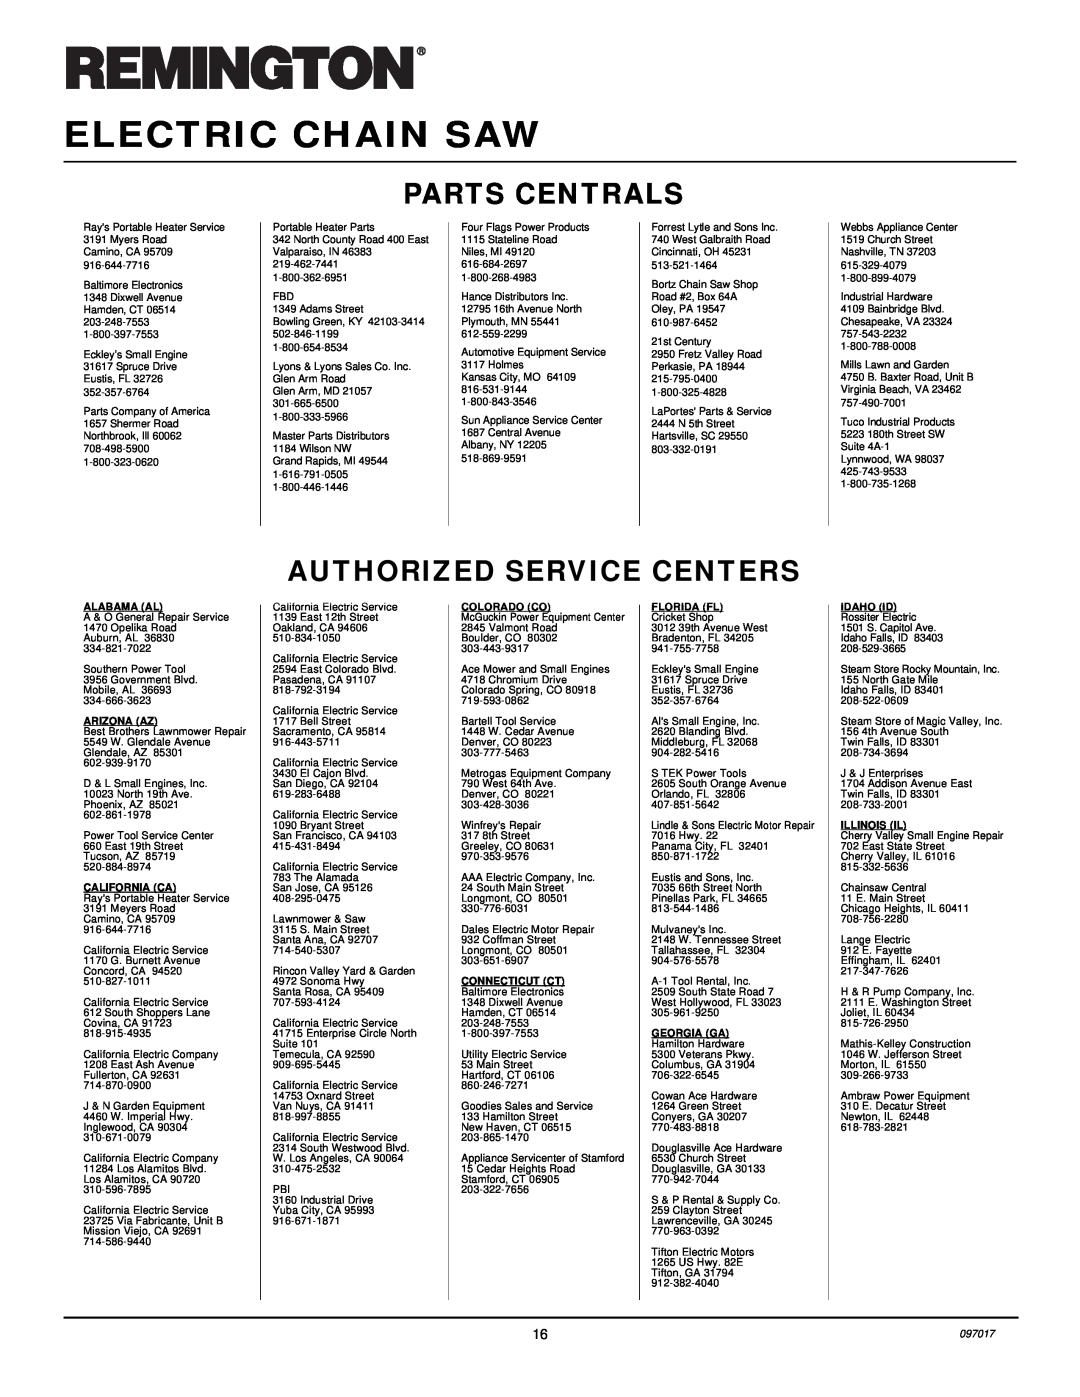 Remington 099178H EL-1 Parts Centrals, Authorized Service Centers, Electric Chain Saw, Alabama Al, Arizona Az, Colorado Co 